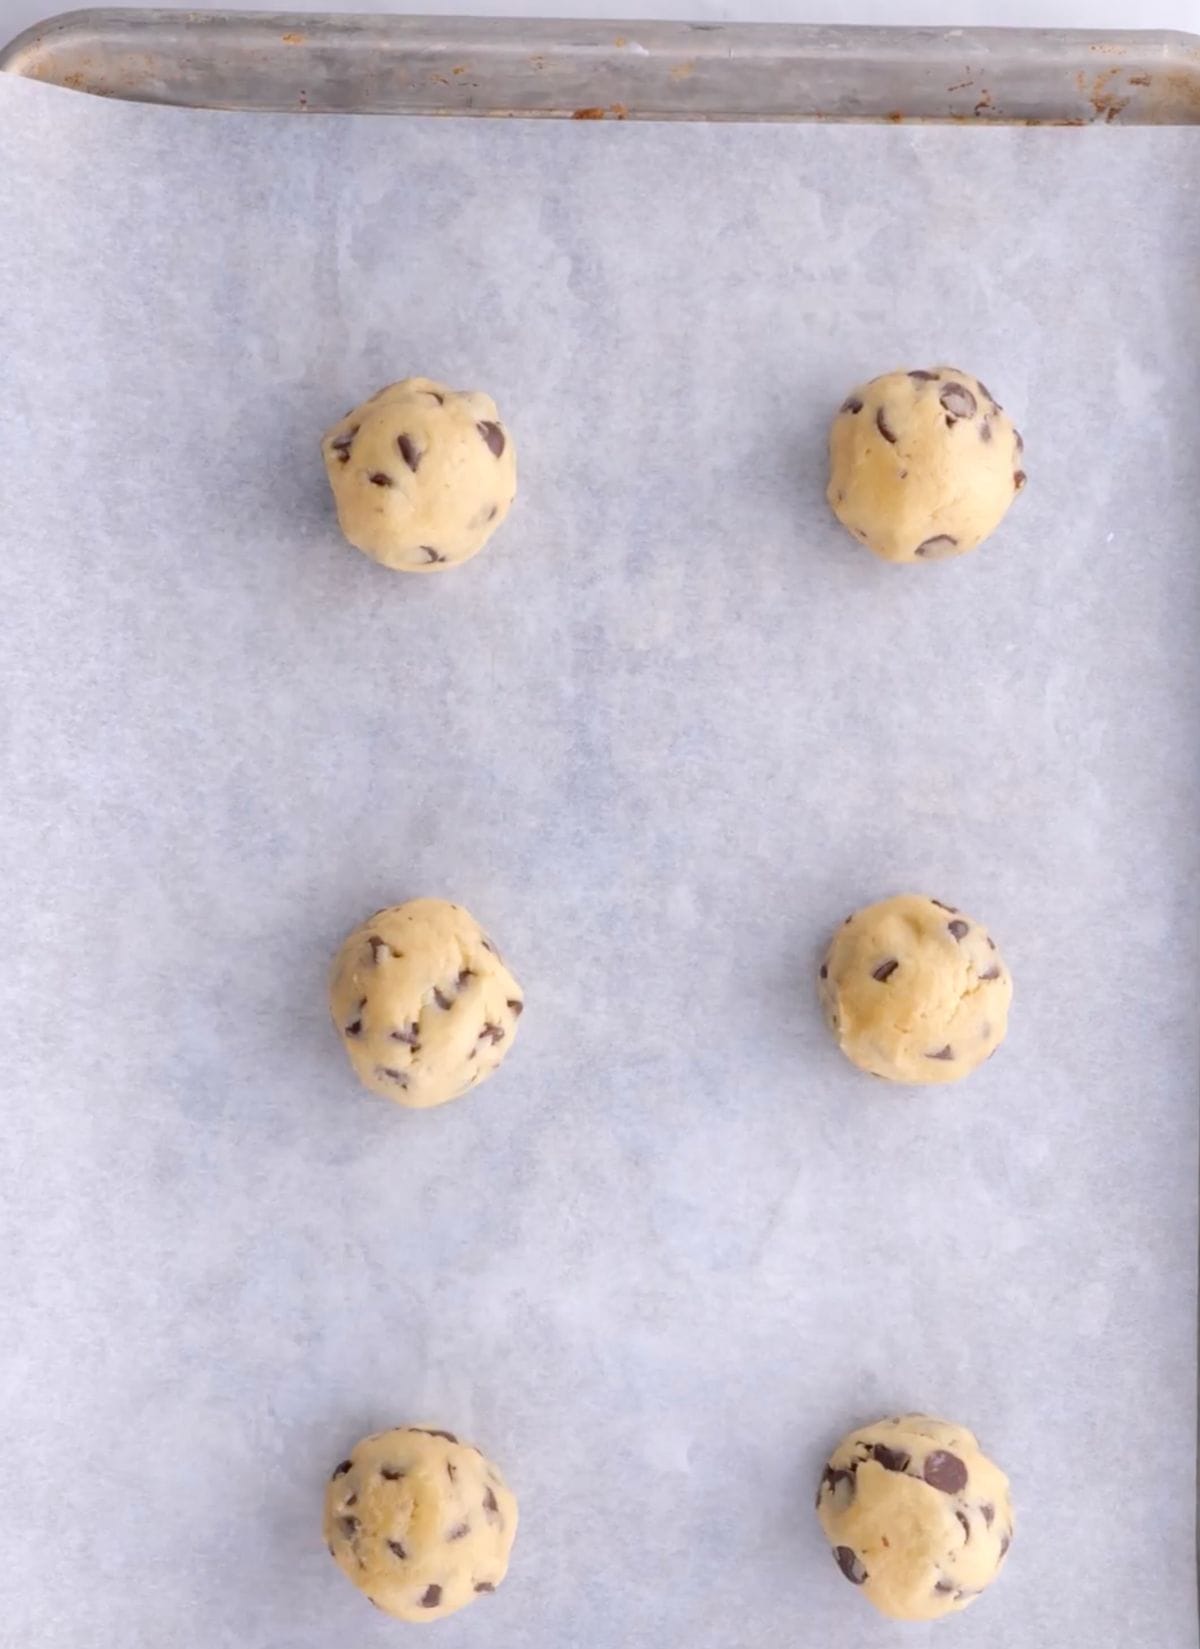 Chocolate Chip Cookies dough balls